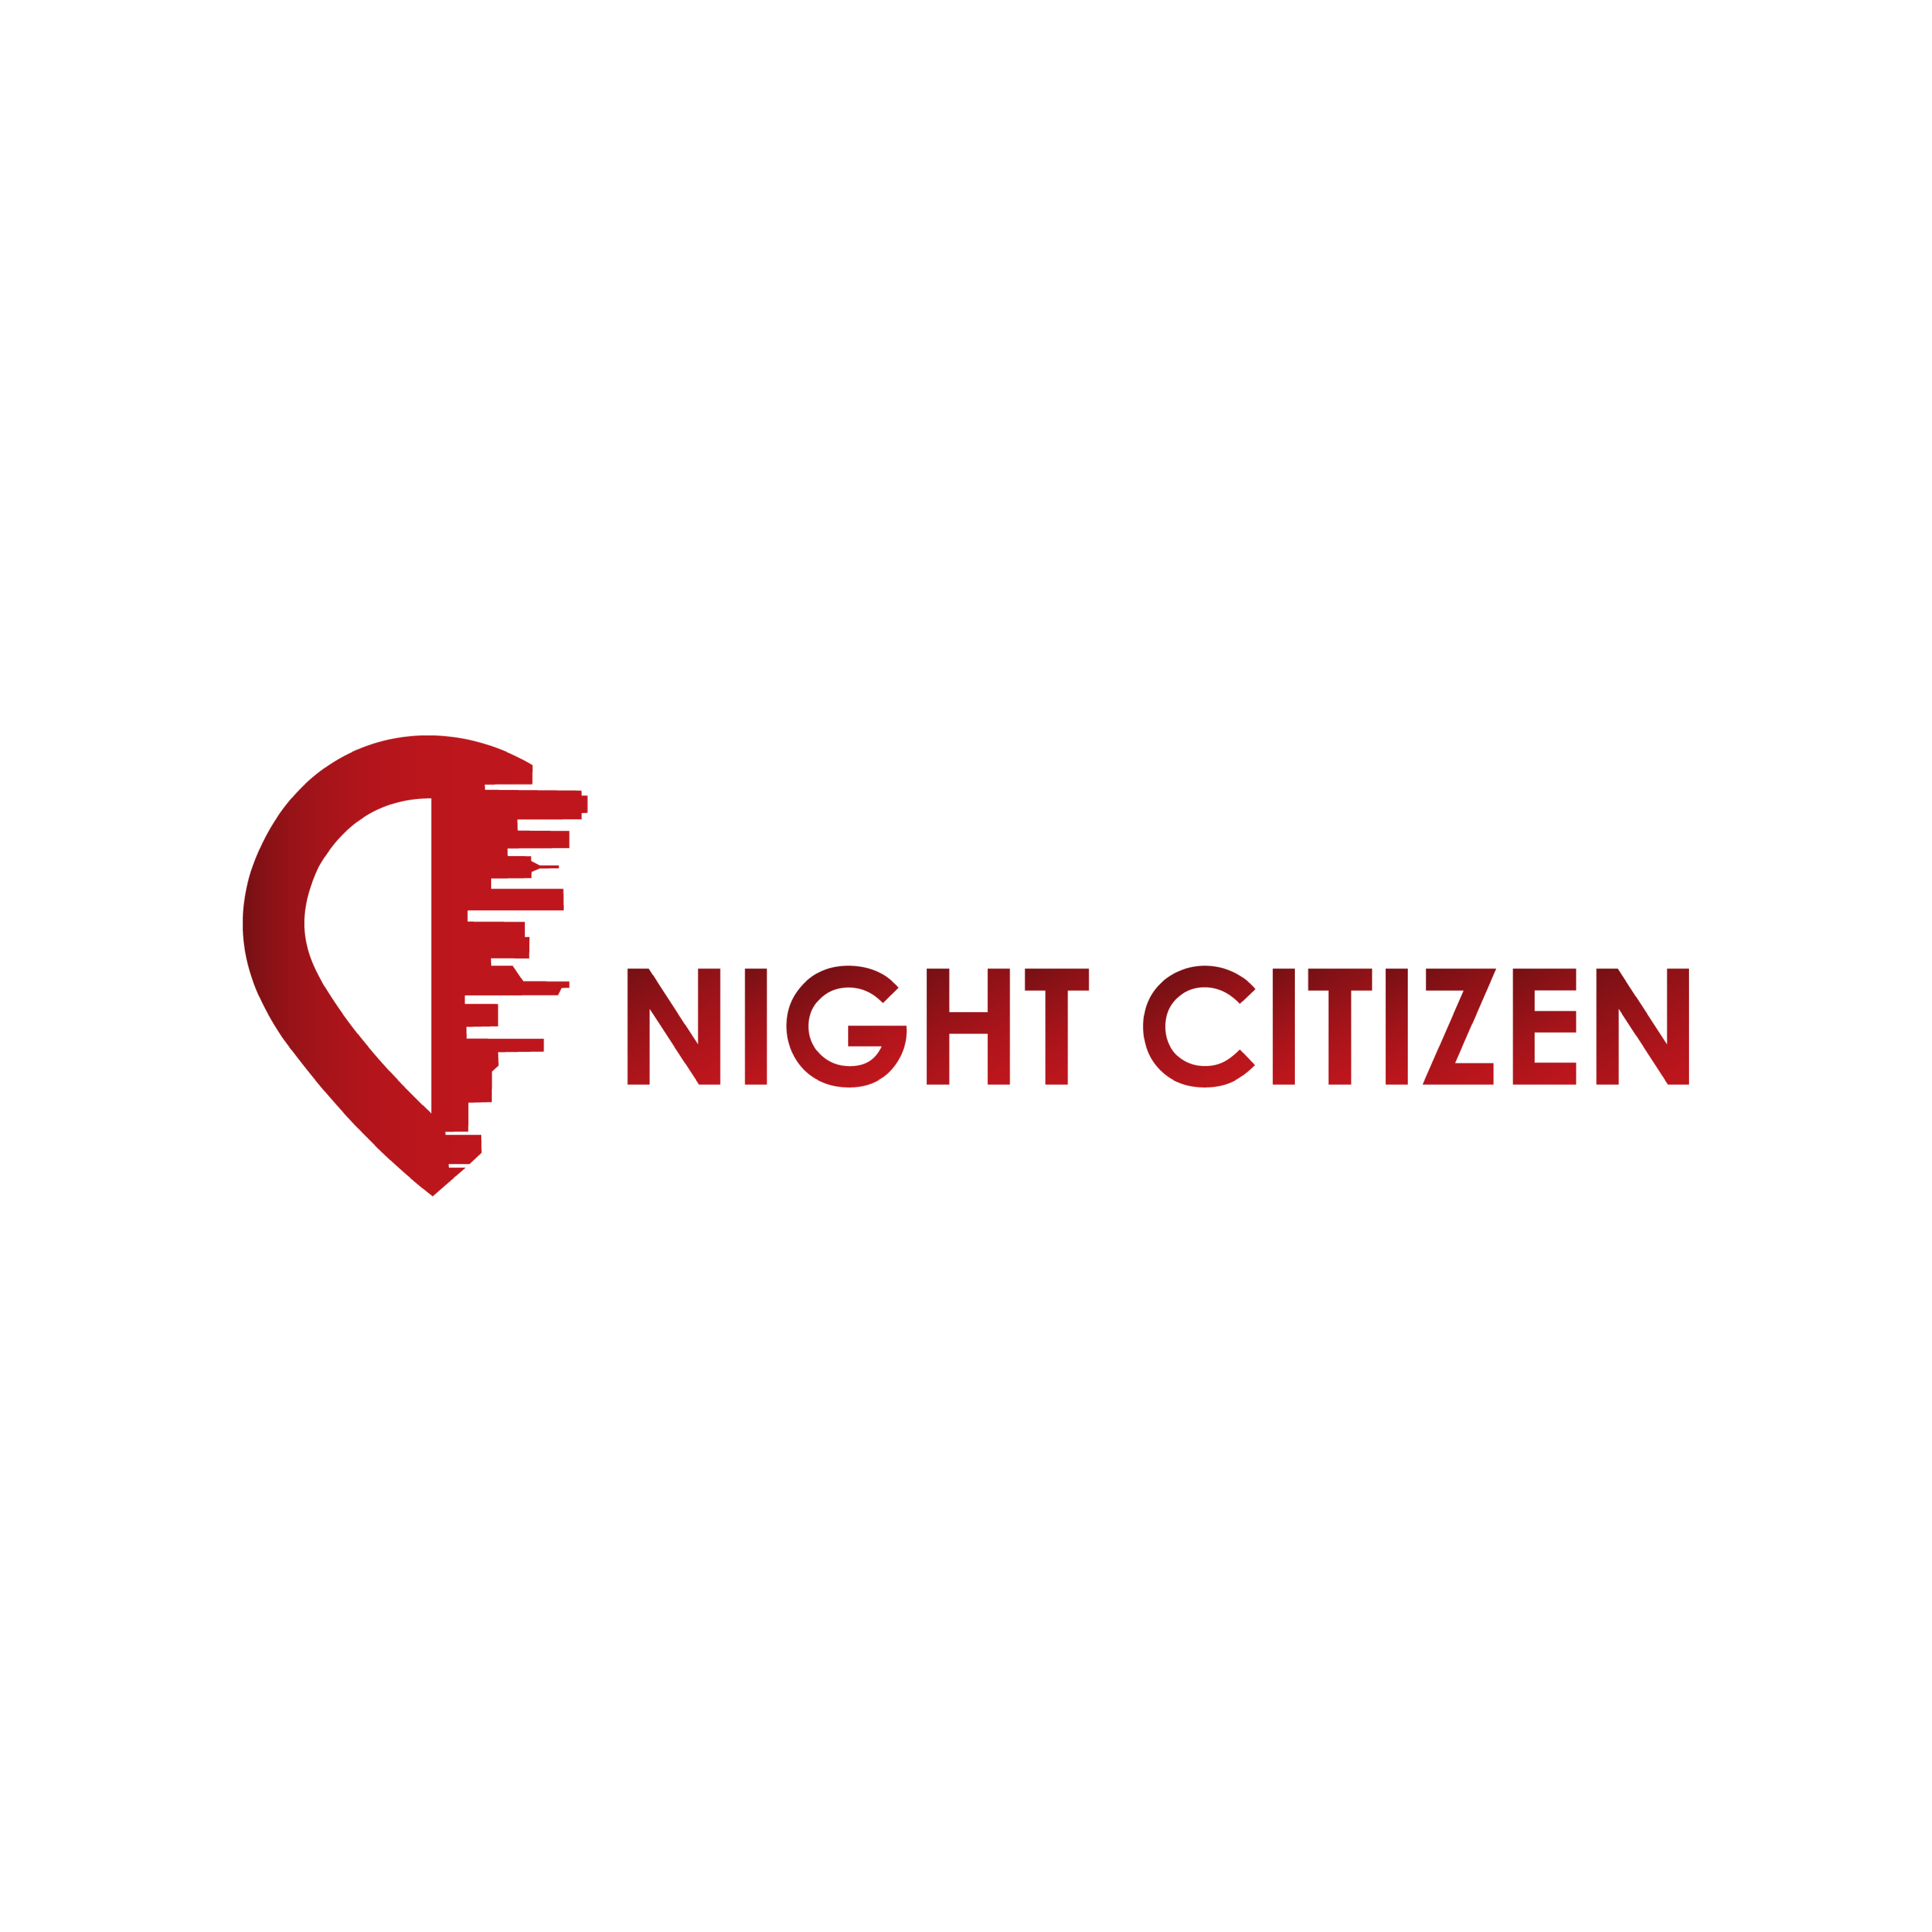 Night Citizen